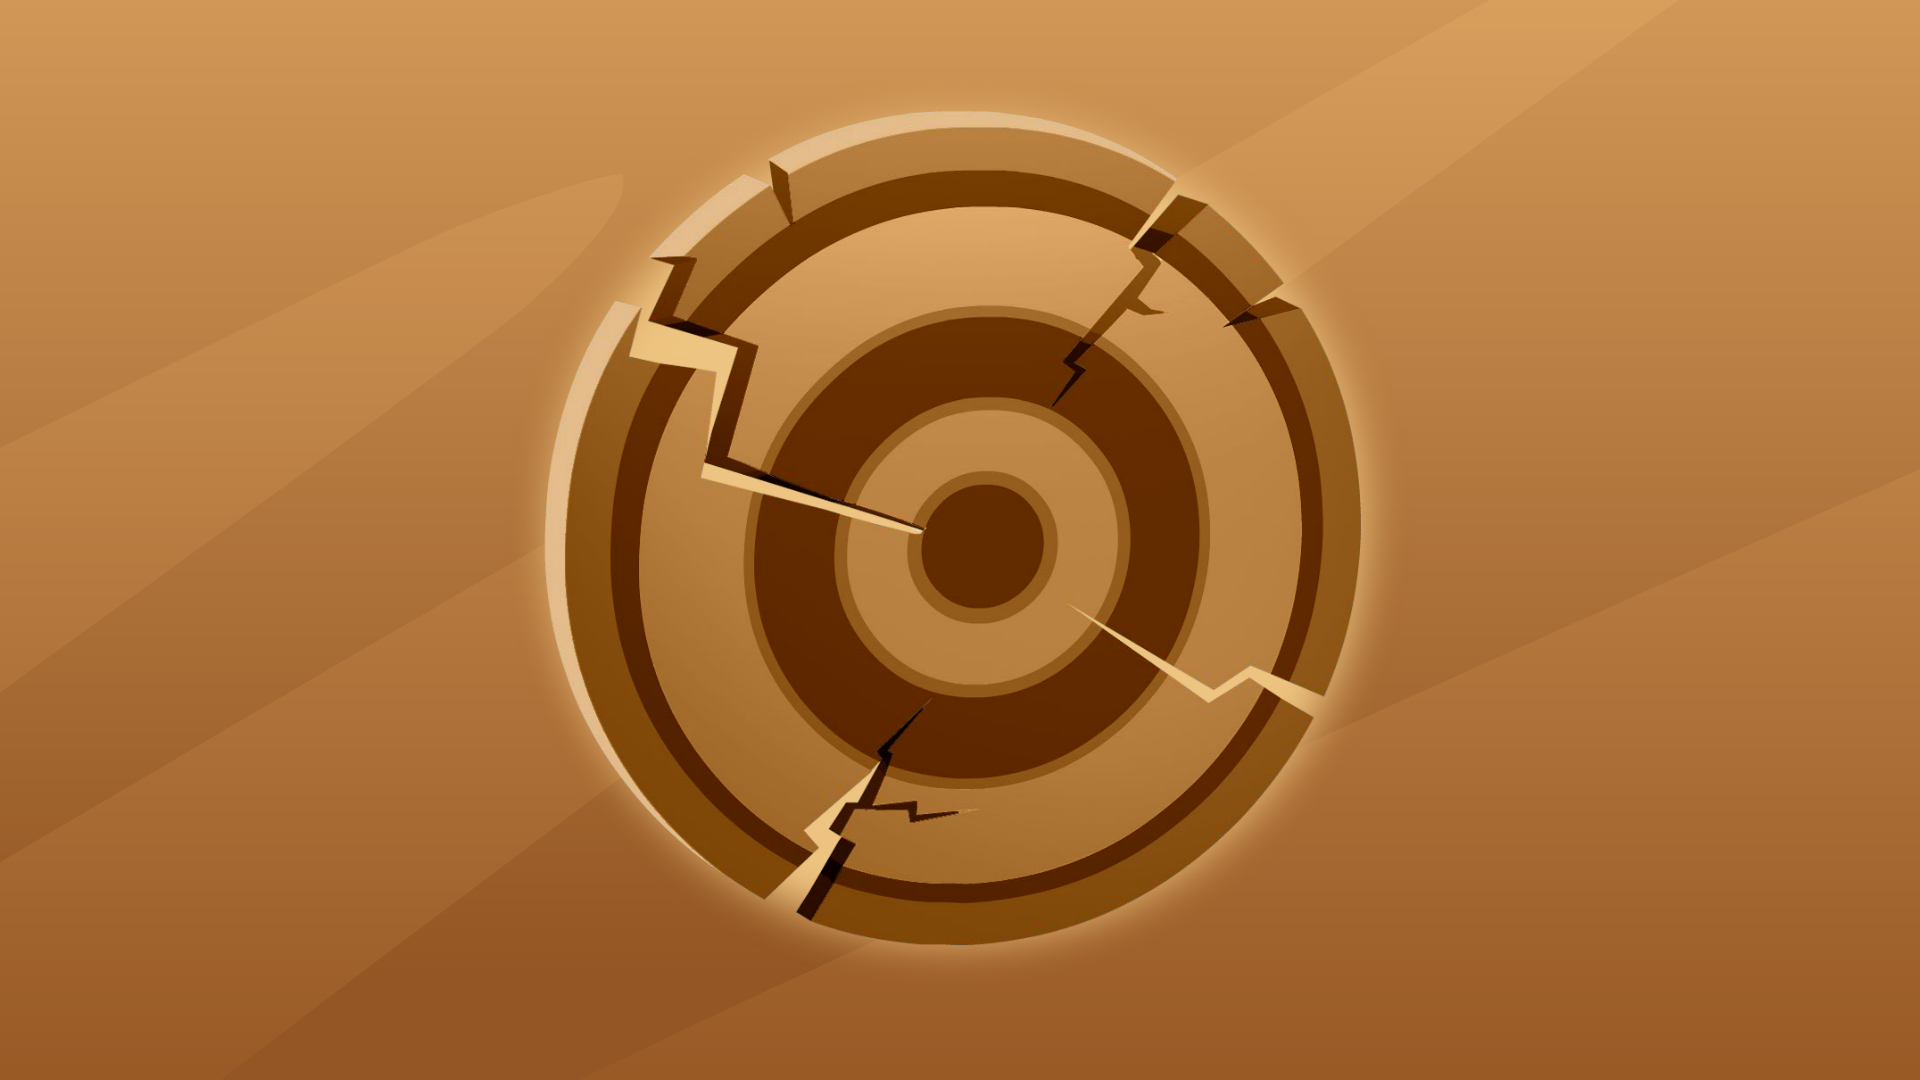 Icon for Bullseye!